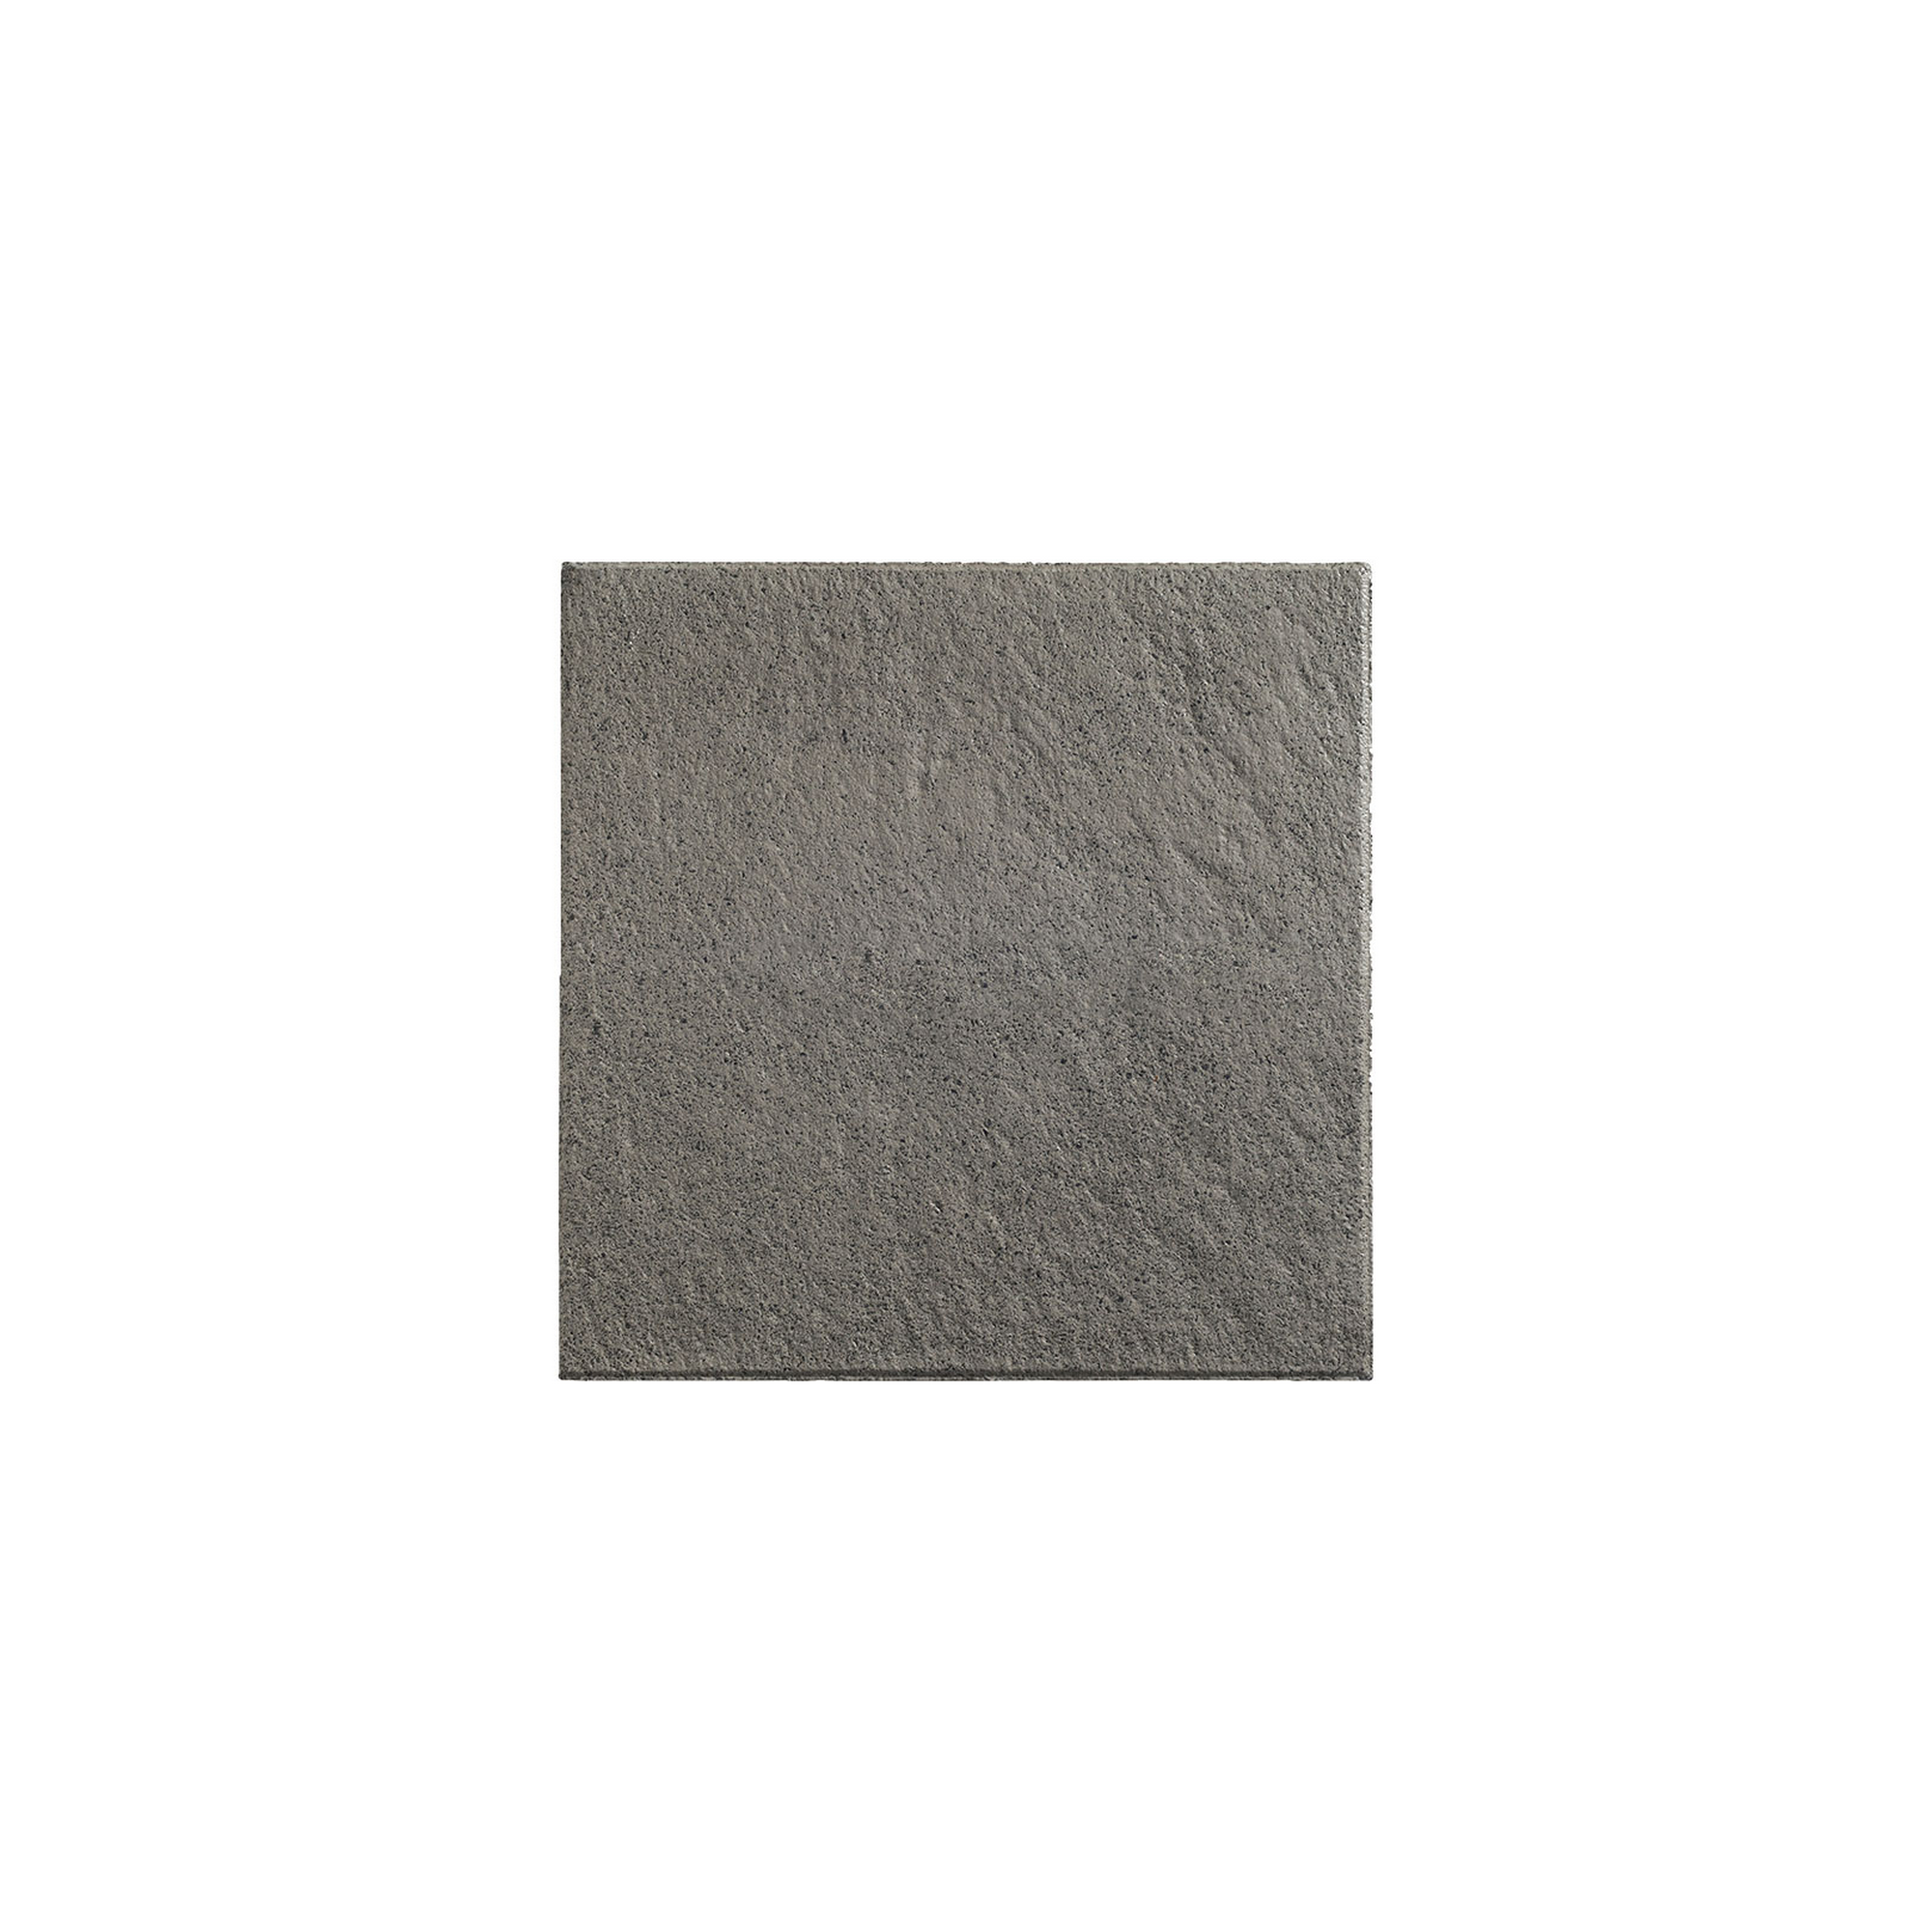 T-Court 'Noble' Beton basaltfarben 40 x 40 x 4 cm + product picture